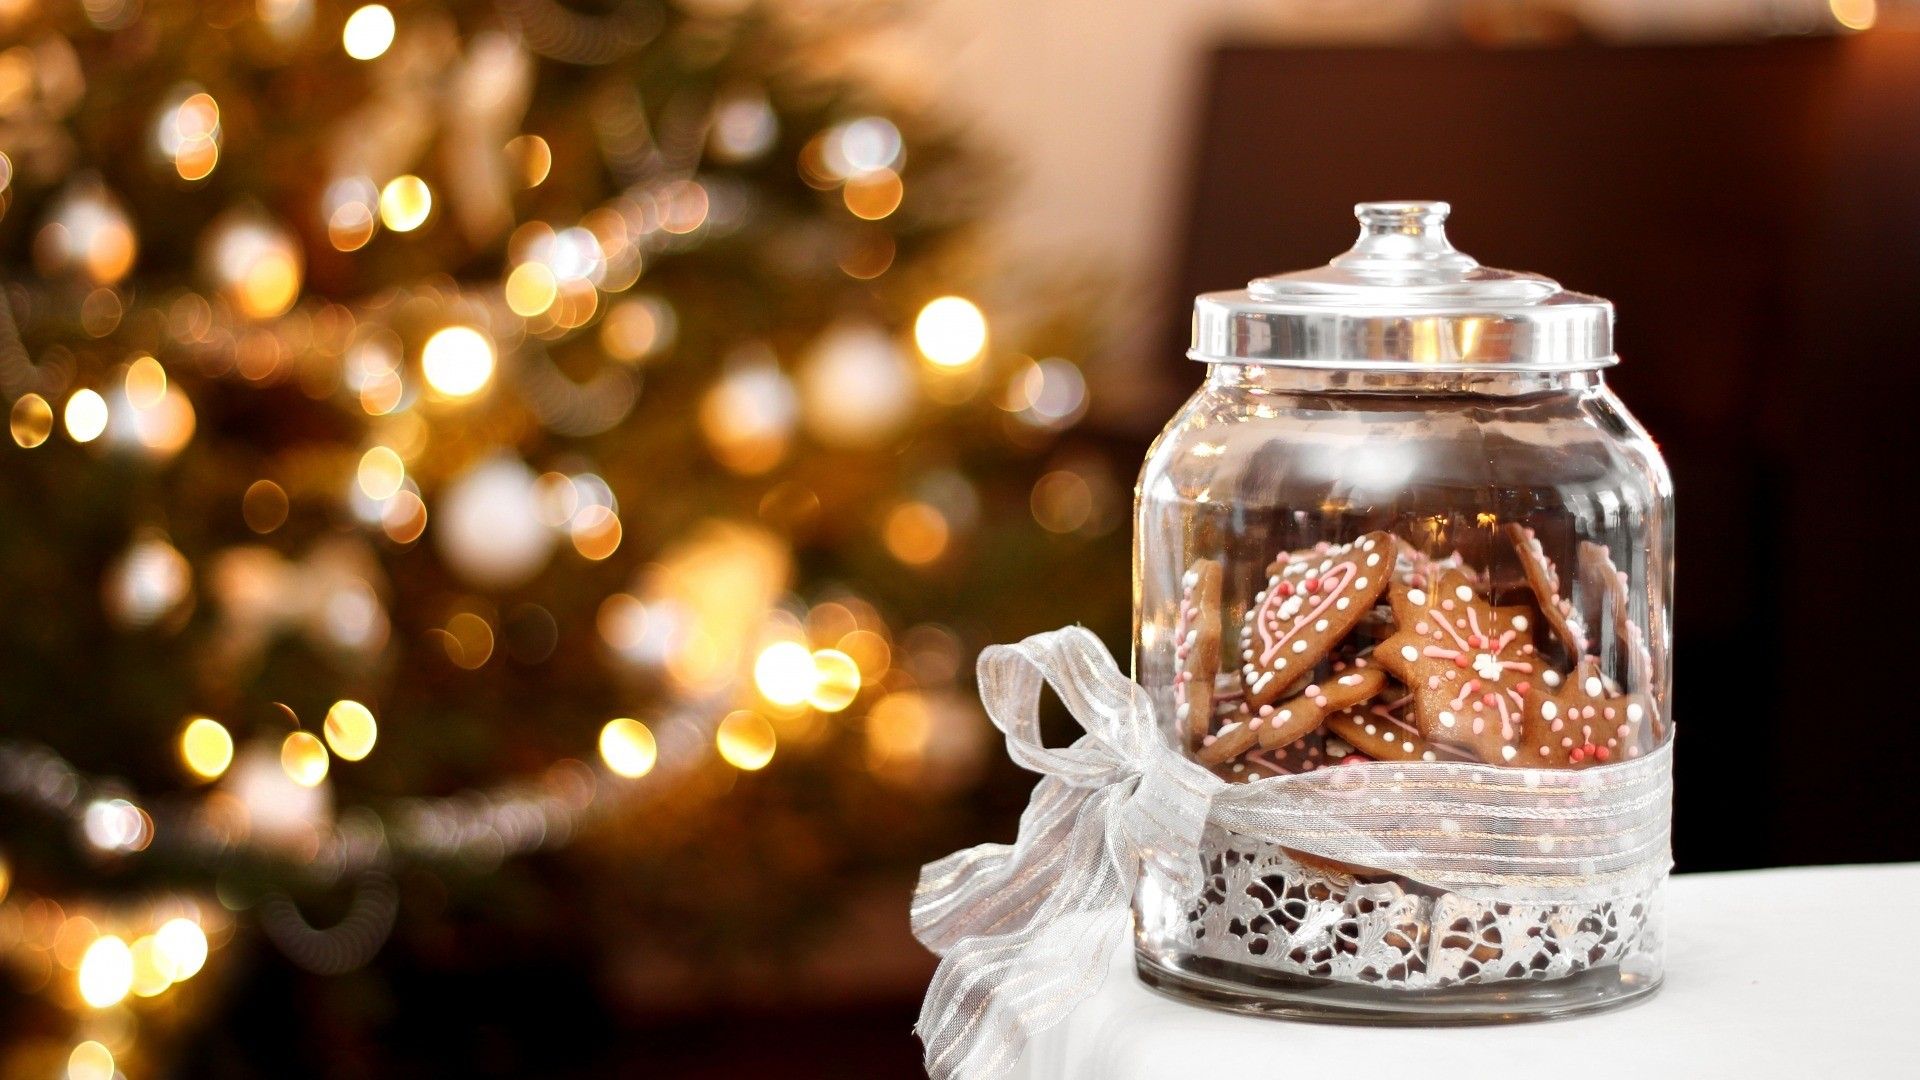 A glass jar with cookies and candy on top - Christmas, Christmas lights, cute Christmas